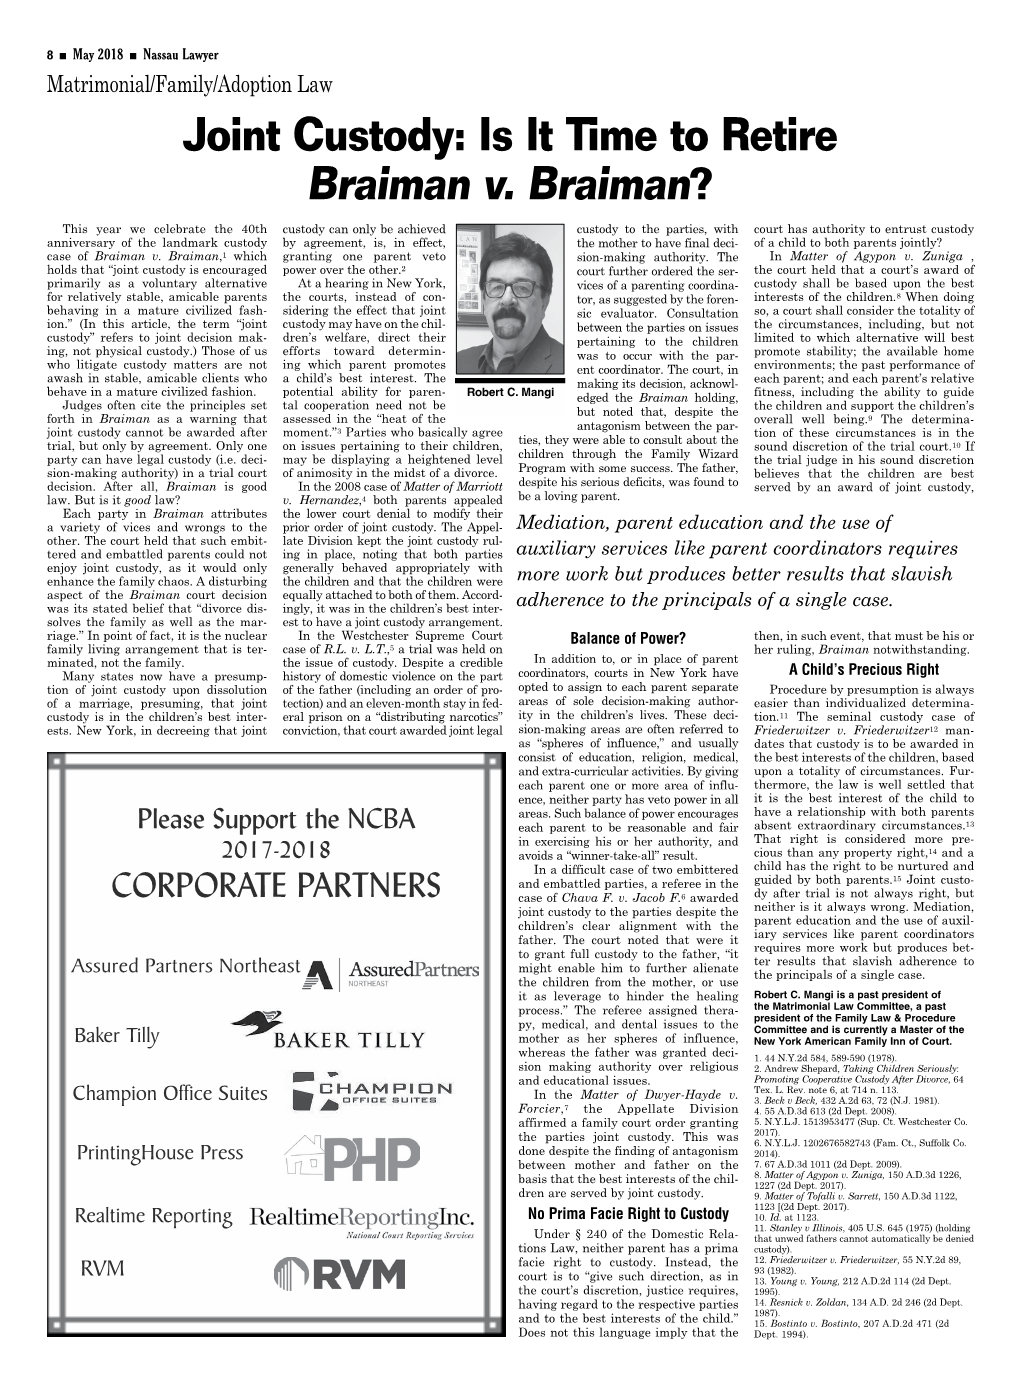 Joint Custody: Is It Time to Retire Braiman V. Braiman?